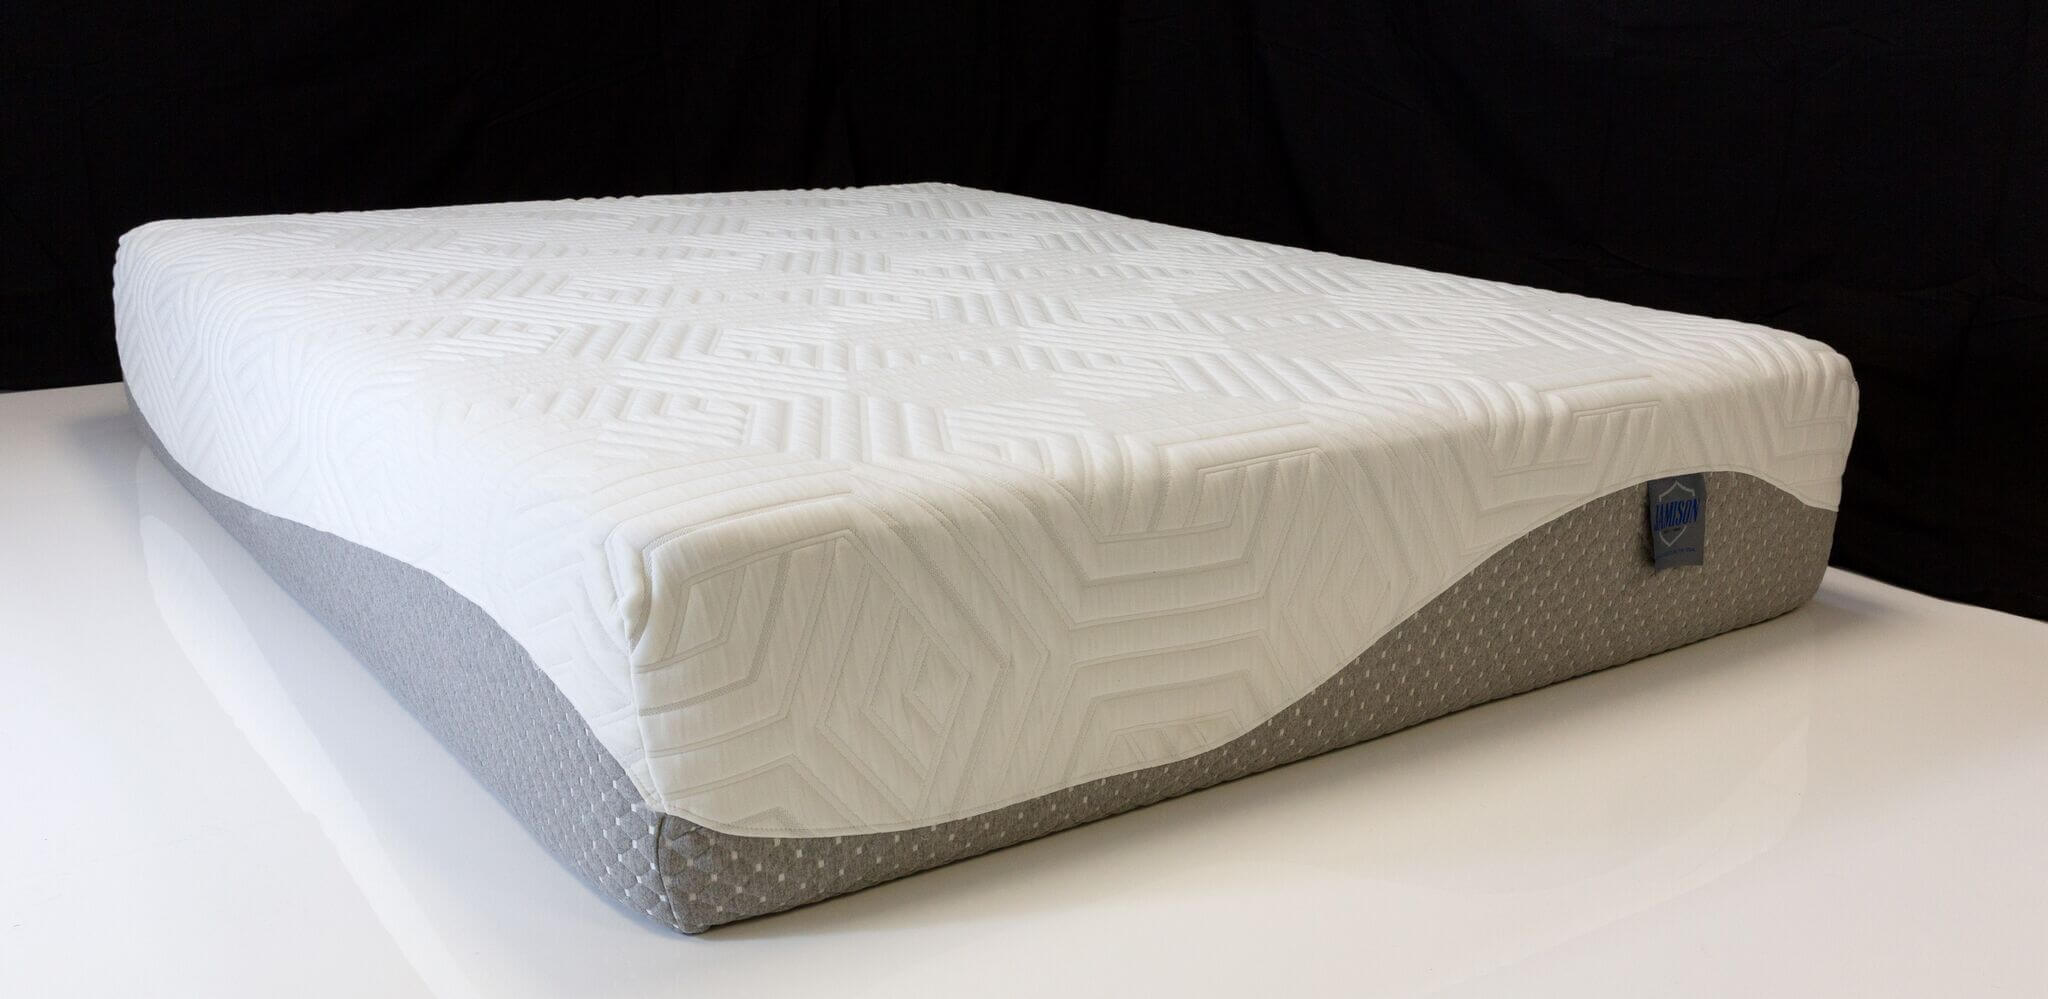 jamison equalizer latex mattress review